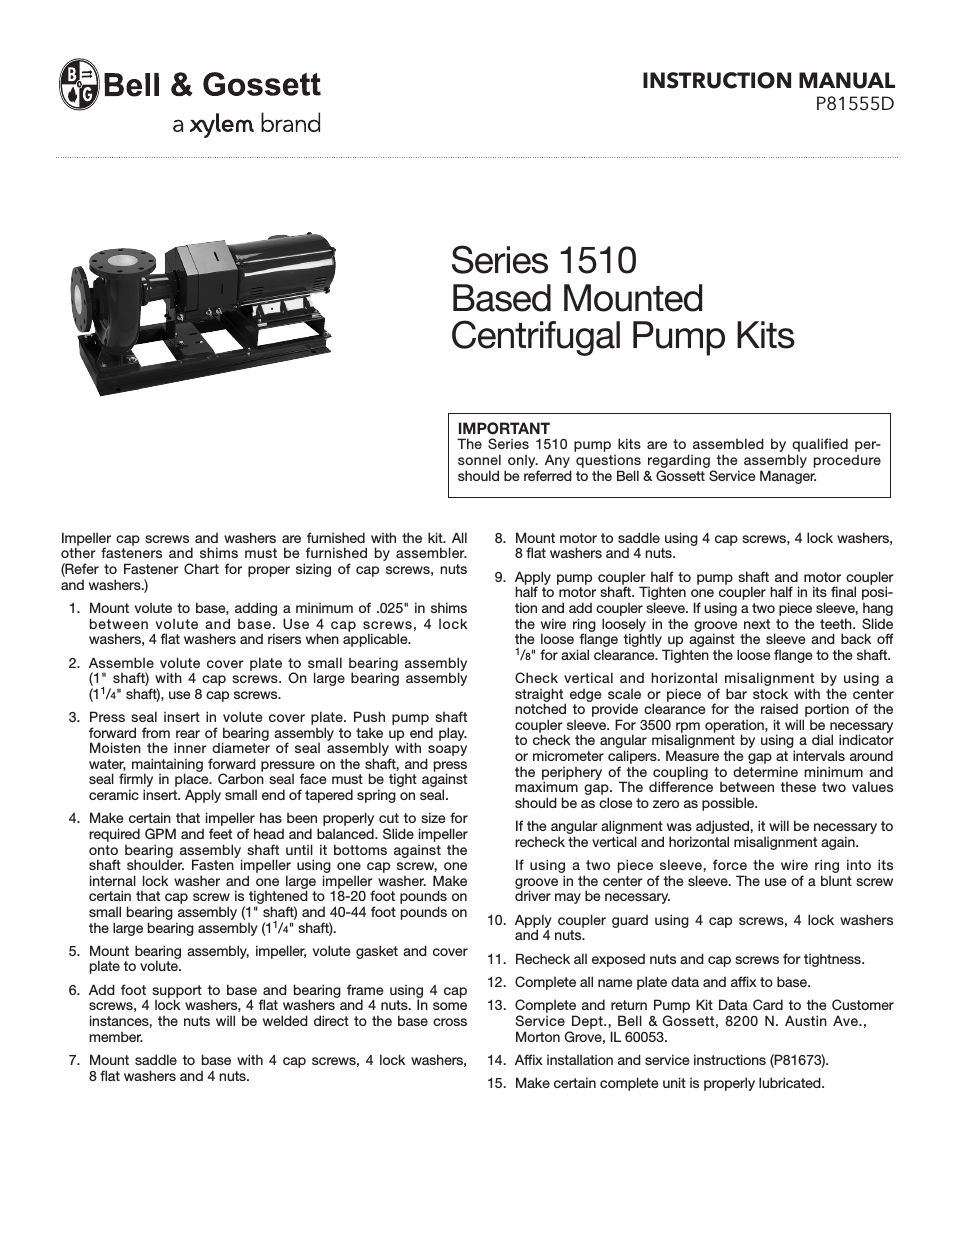 P81555D Series 1510 Base Mounted Centrifugal Pump Kits